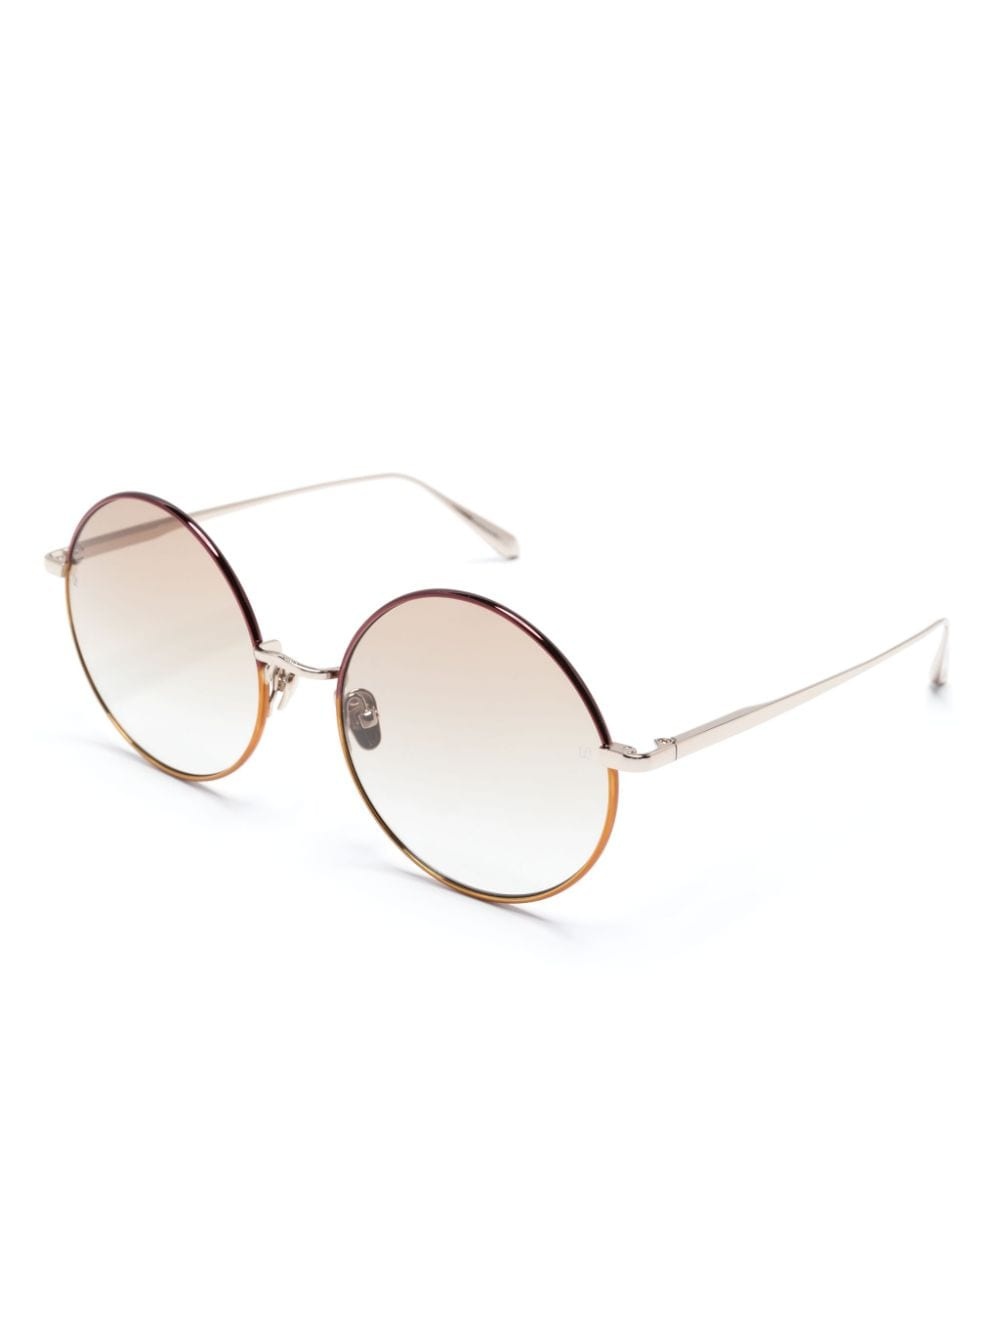 round-frame metallic sunglasses - 2